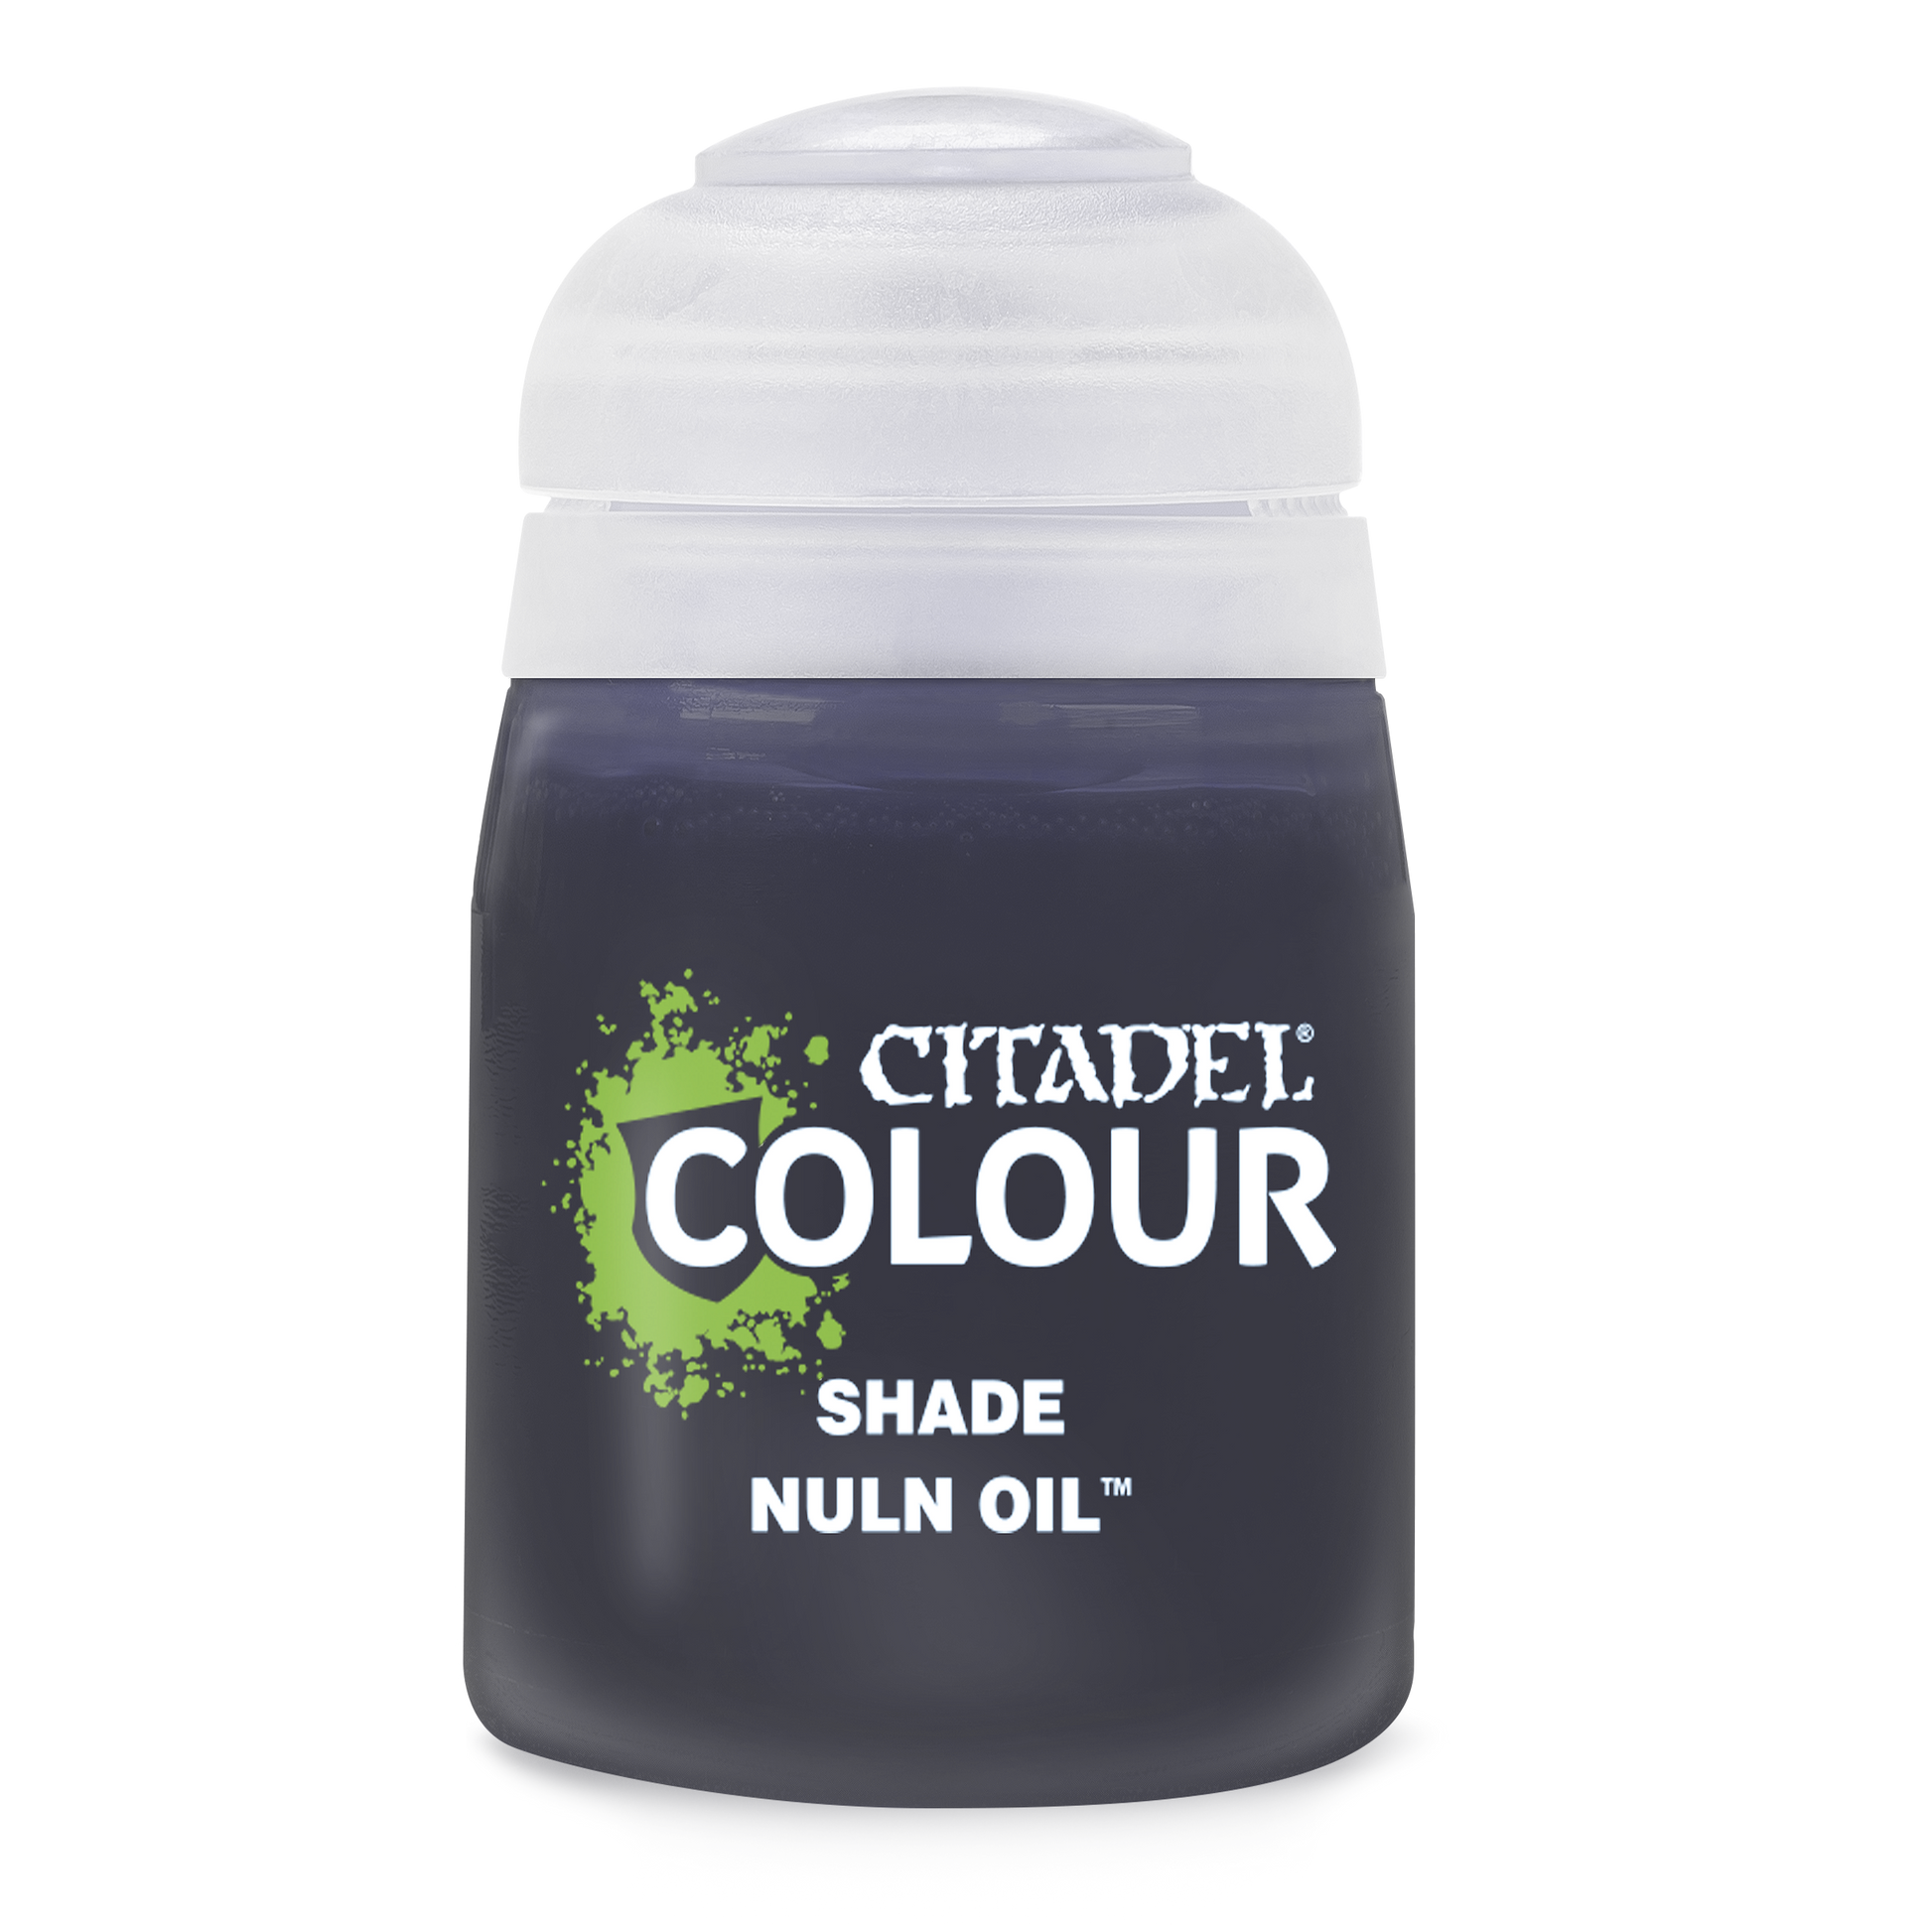 Citadel Shade Nuln Oil 18ml